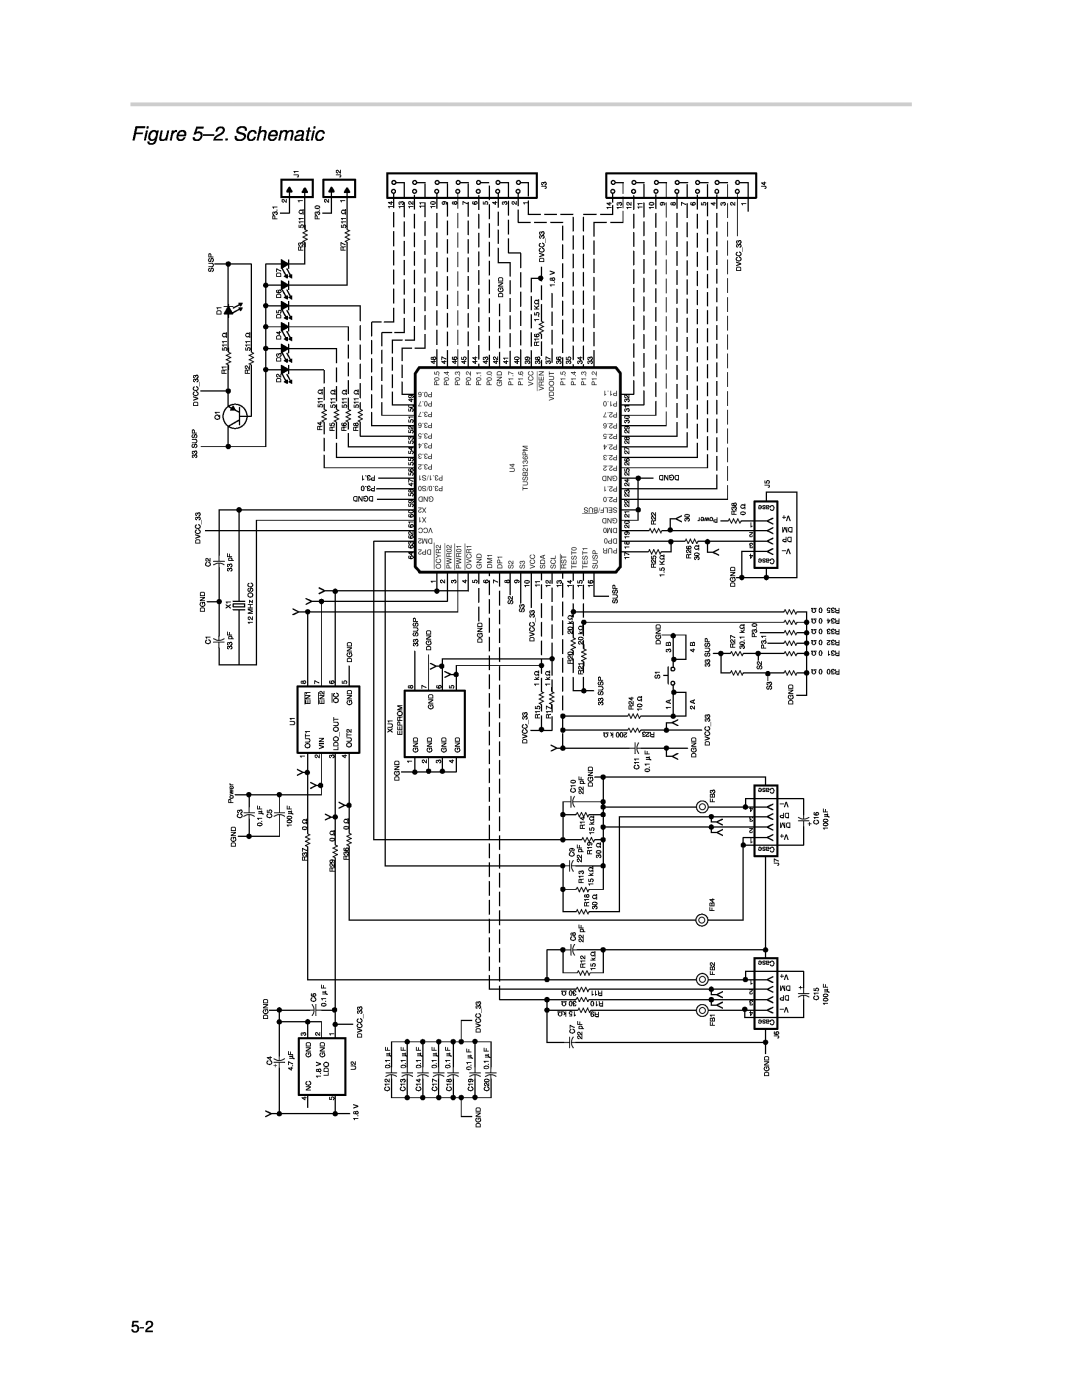 Texas Instruments TPS2149 manual 0.1 ∝, 2. Schematic 